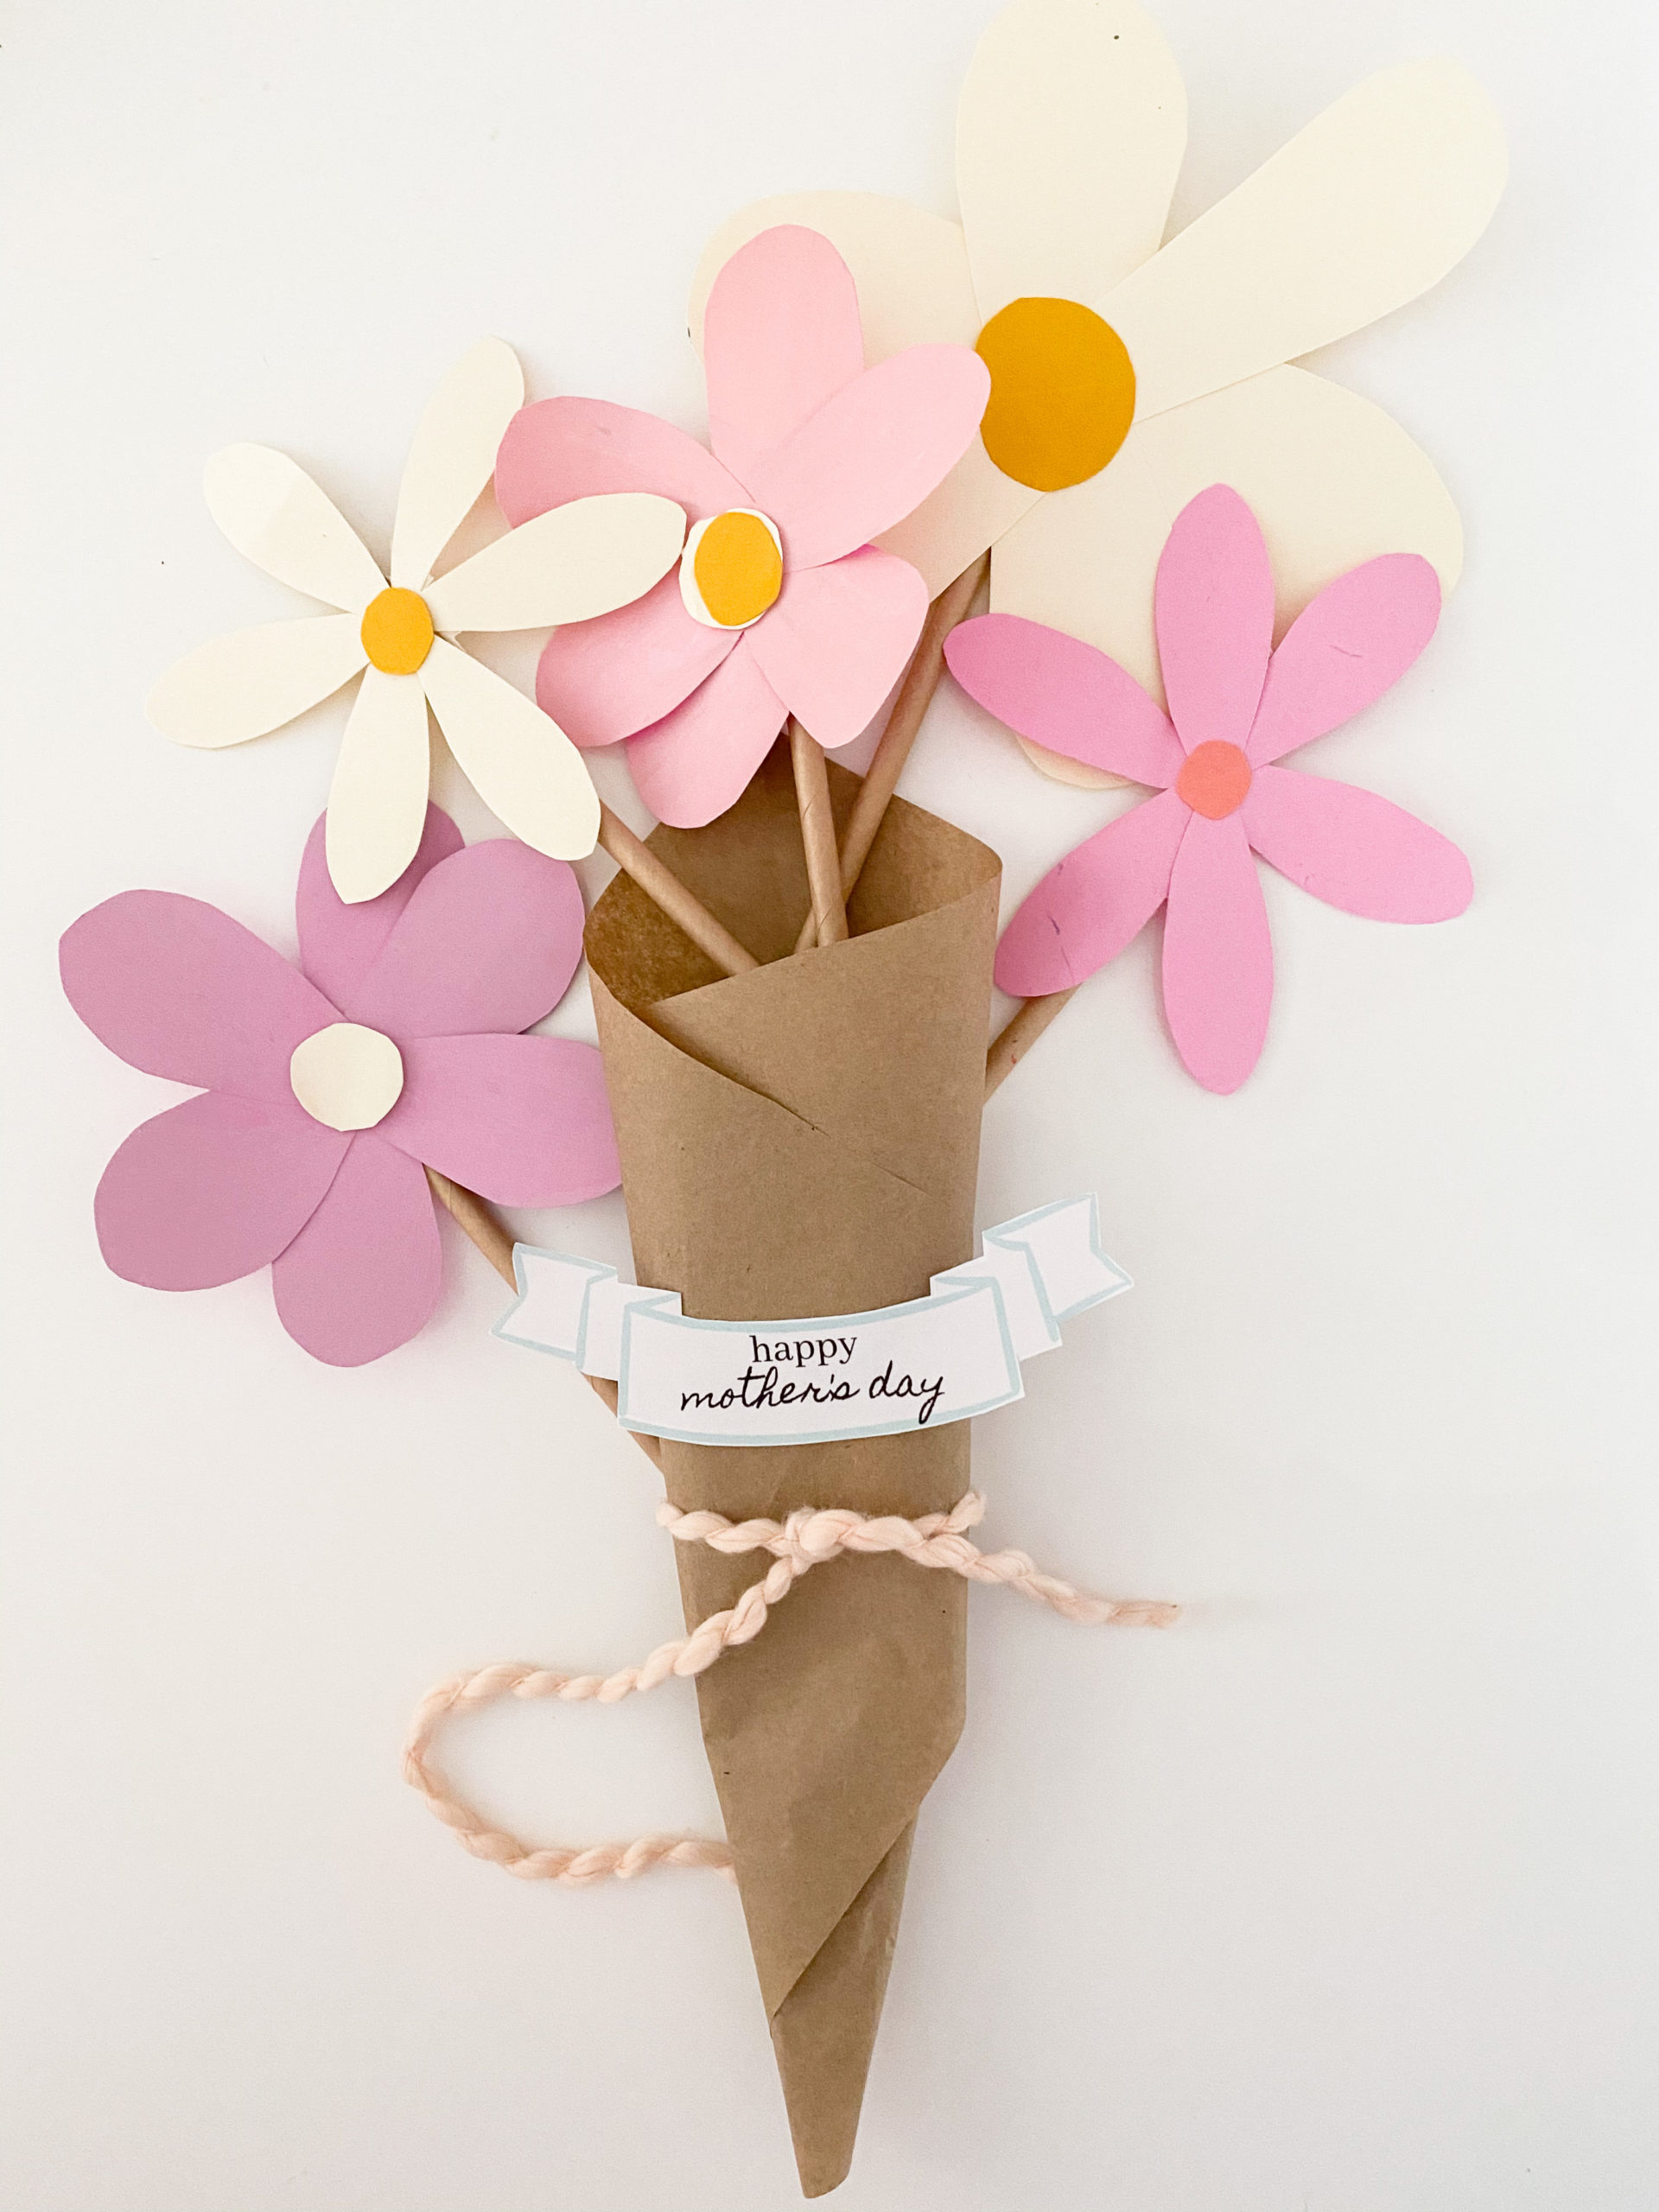 DIY Paper Flower Bouquet for Spring